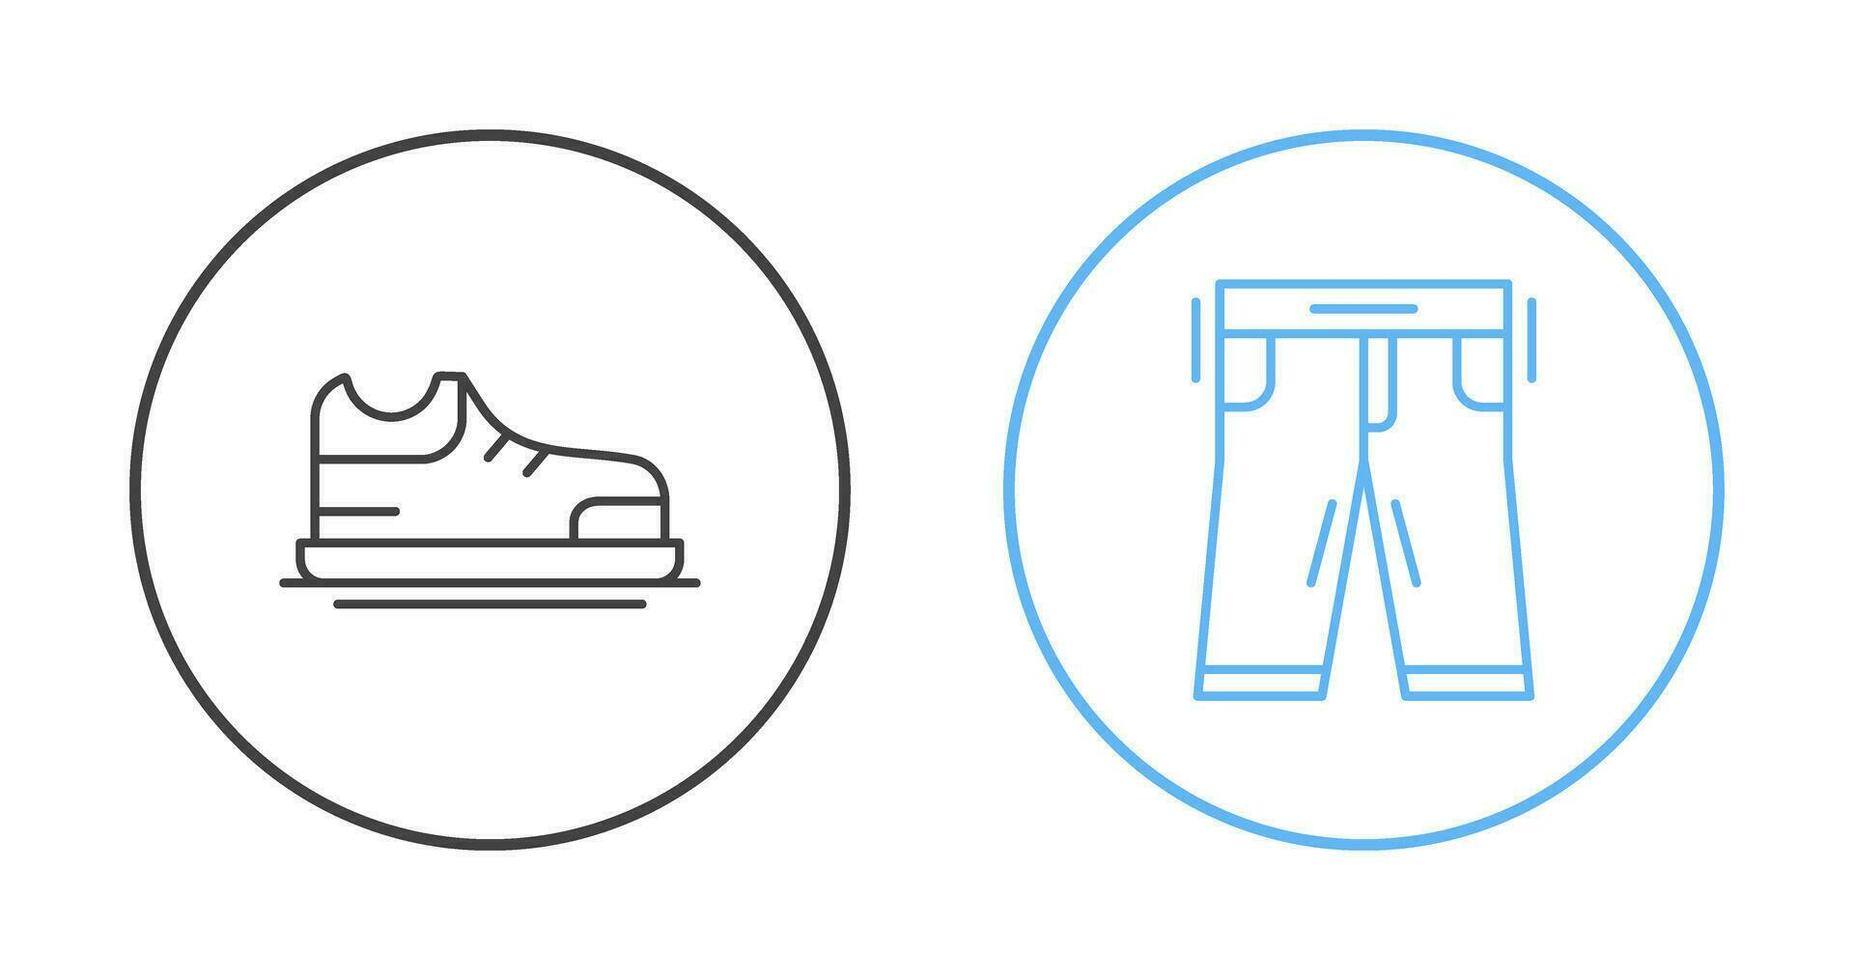 Schuhe und Hose Symbol vektor